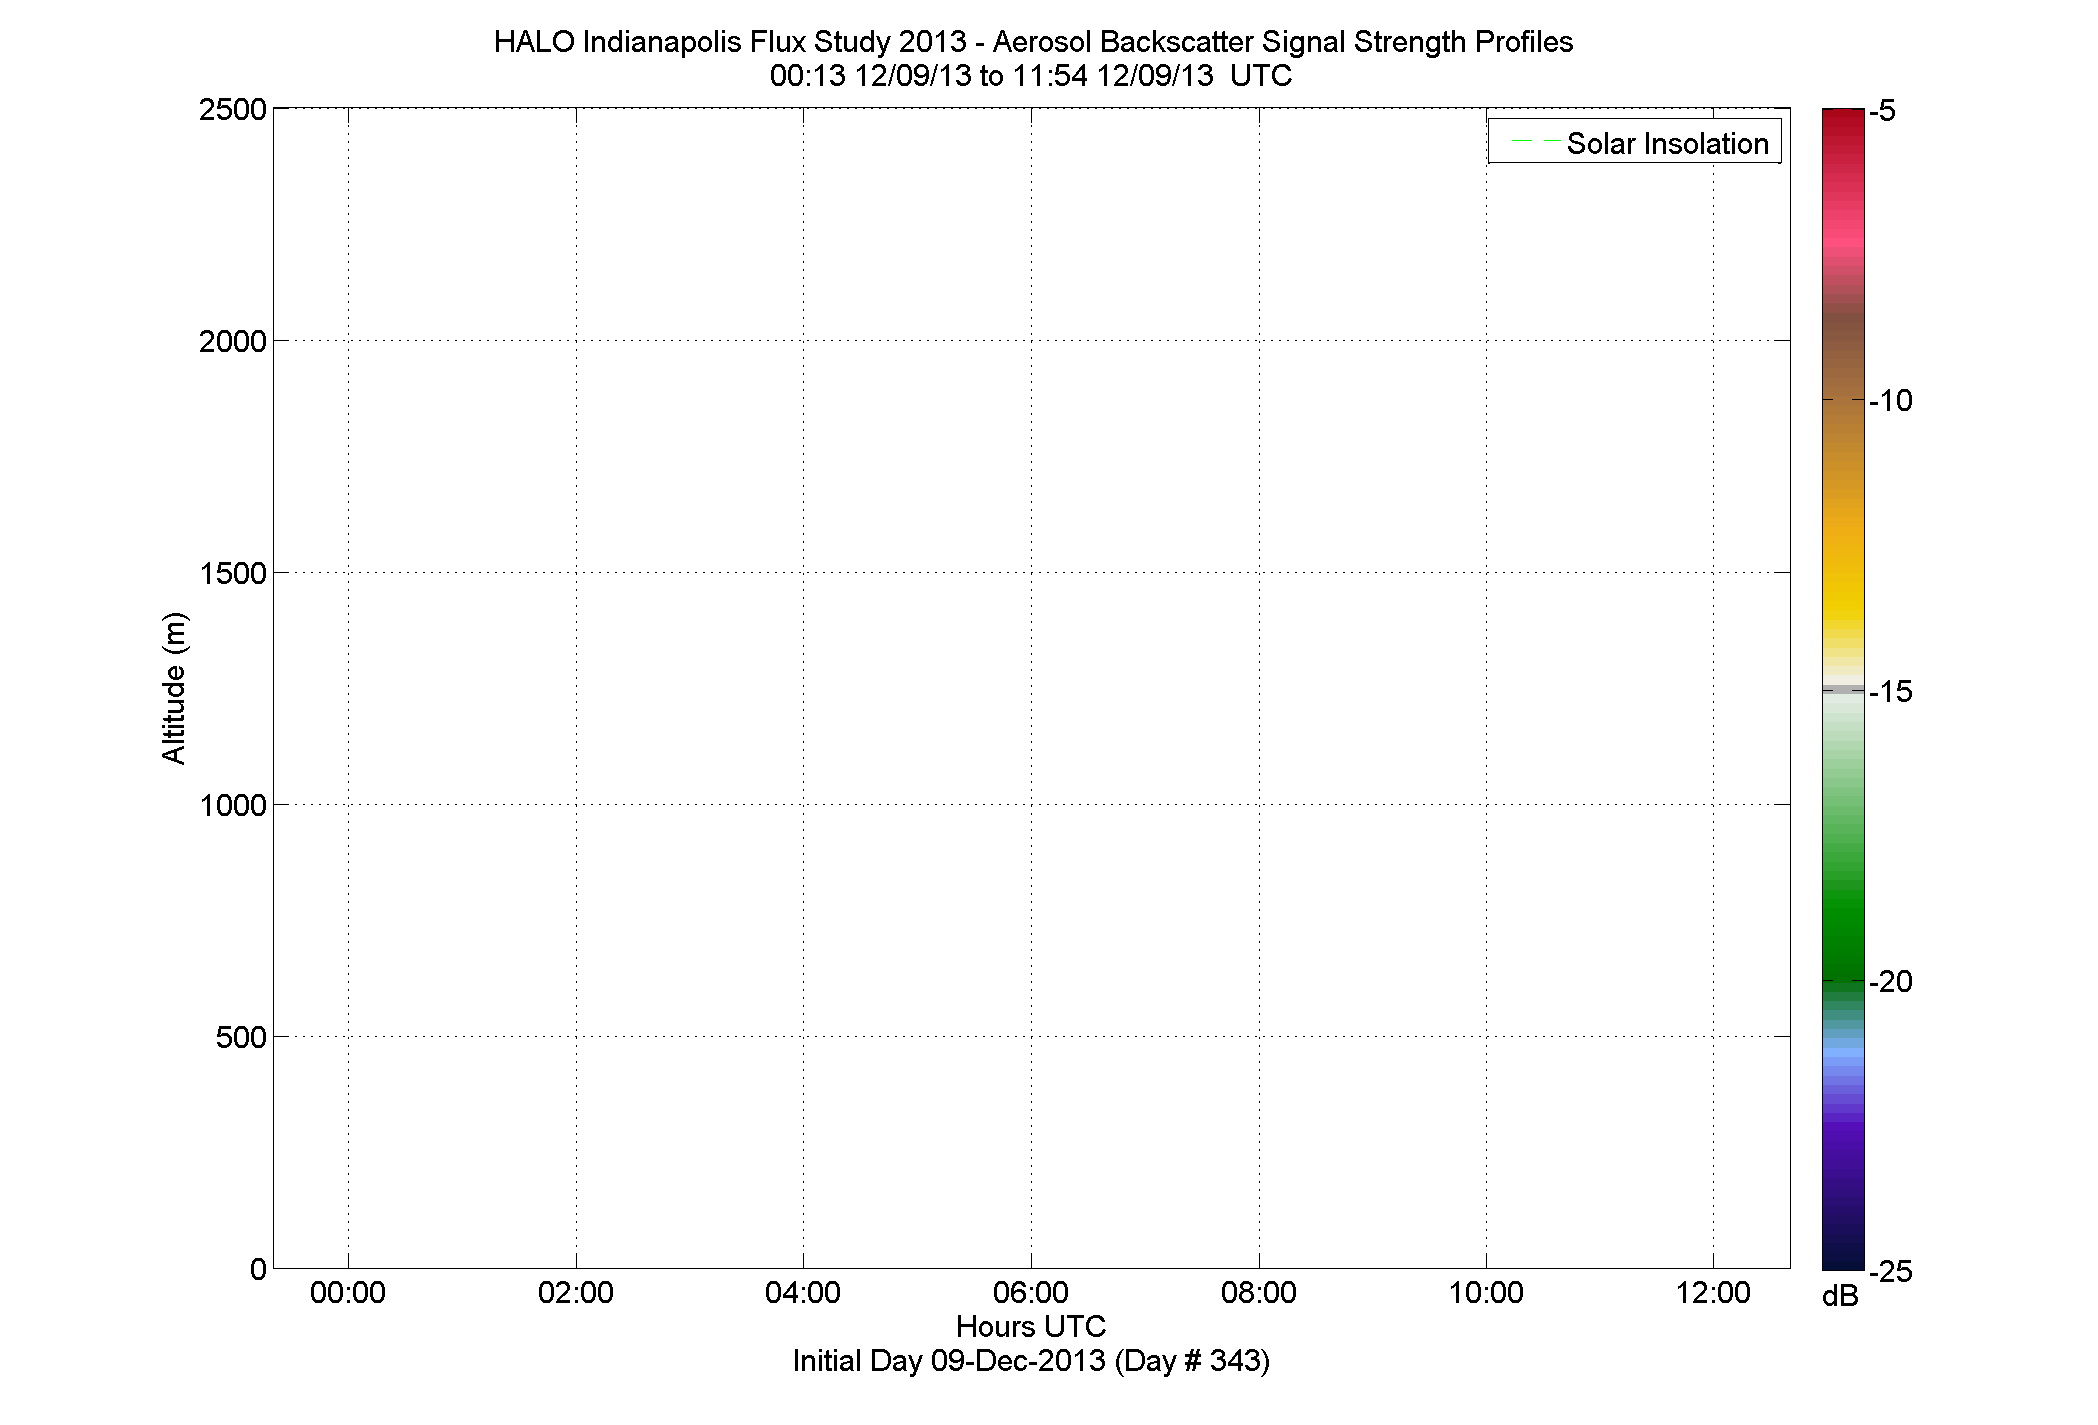 HALO aerosol backscatter signal strength profile - December 9 am